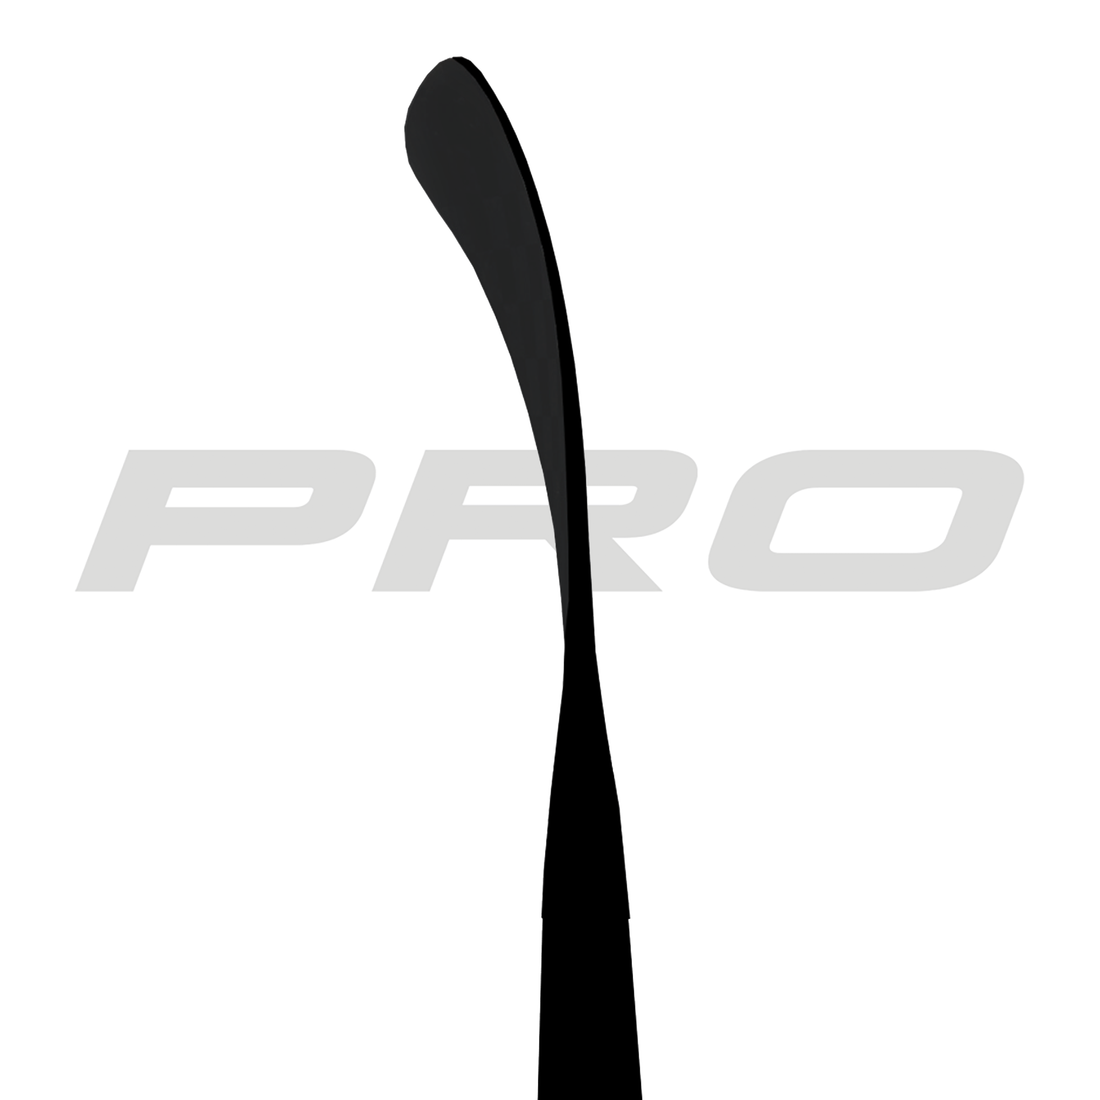 PRO68 (ST: Jagr Pro) - Third Line (425 G) - Pro Stock Hockey Stick - Right